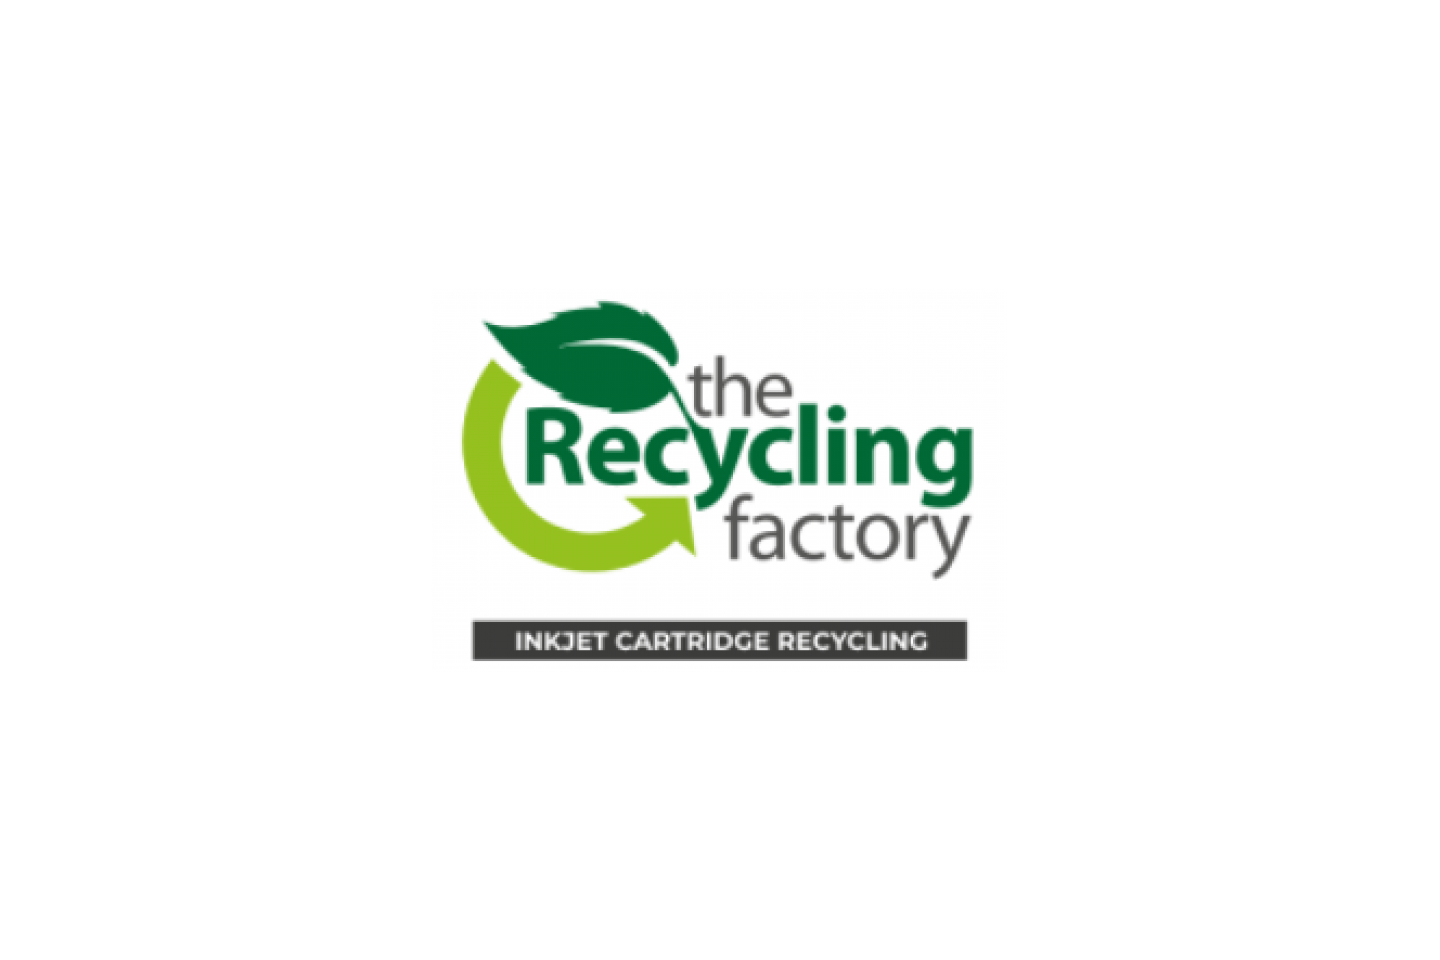 Recycling factory logo